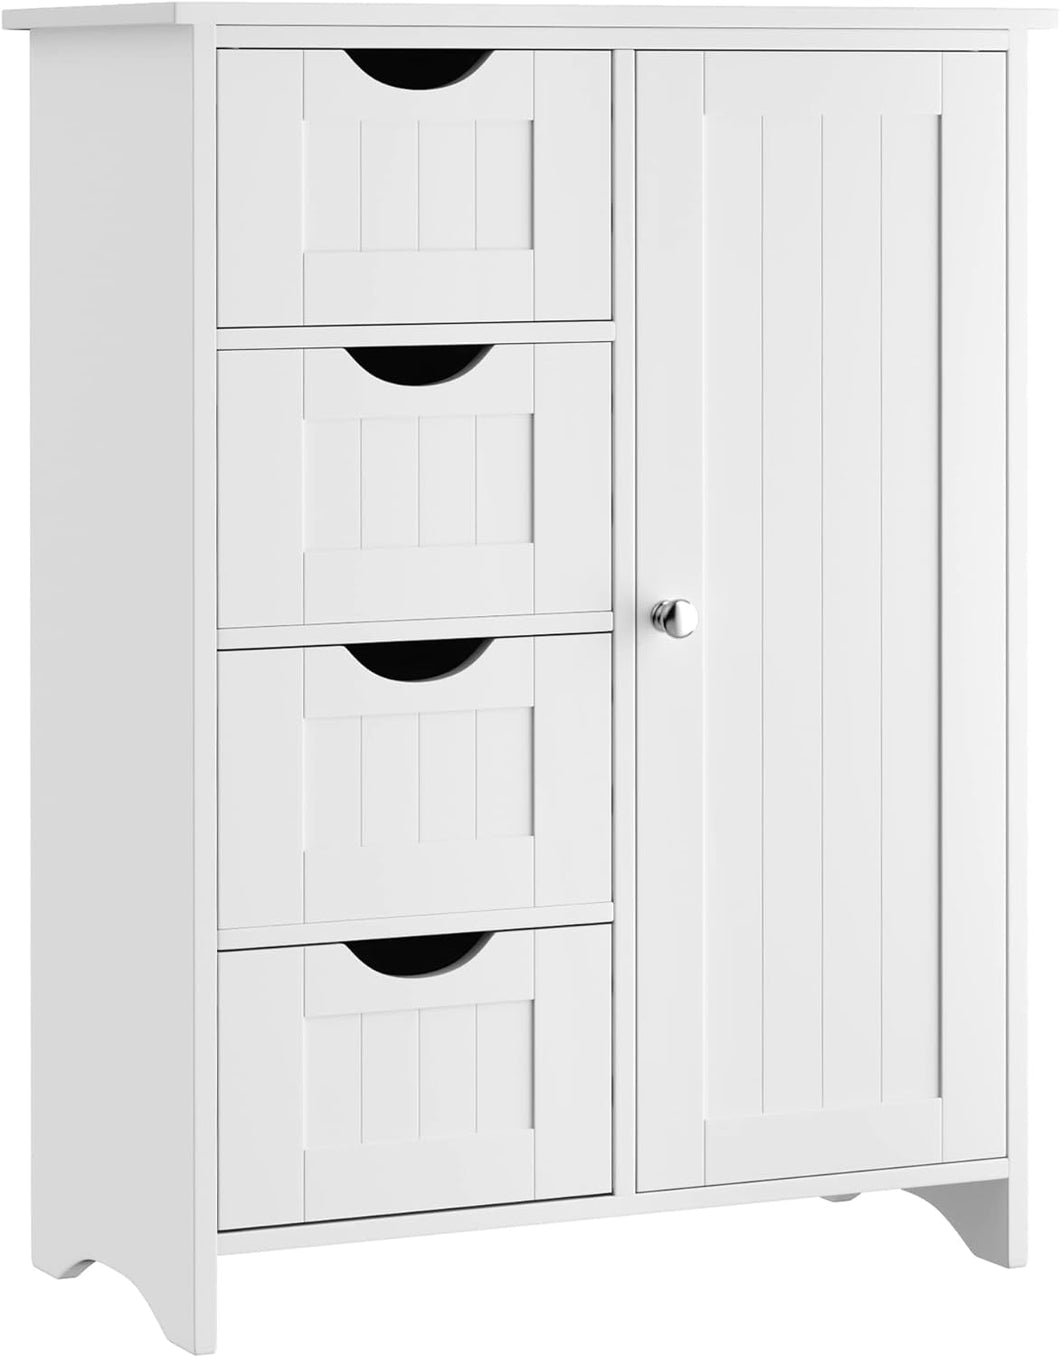 Bathroom Storage Cabinet, Floor Cabinet with 4 Drawers and 1 Adjustable Shelf, Storage Oragnizer for Living Room, Kitchen, Bathroom (White)